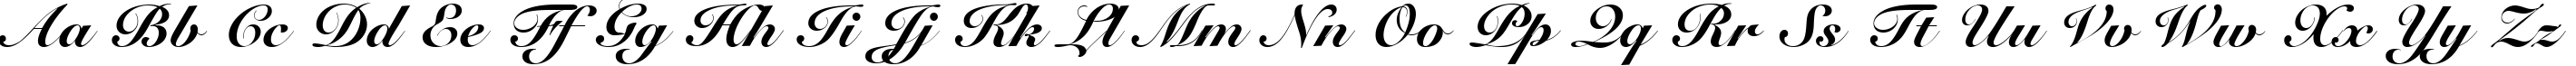 Пример написания английского алфавита шрифтом Snell Black BT